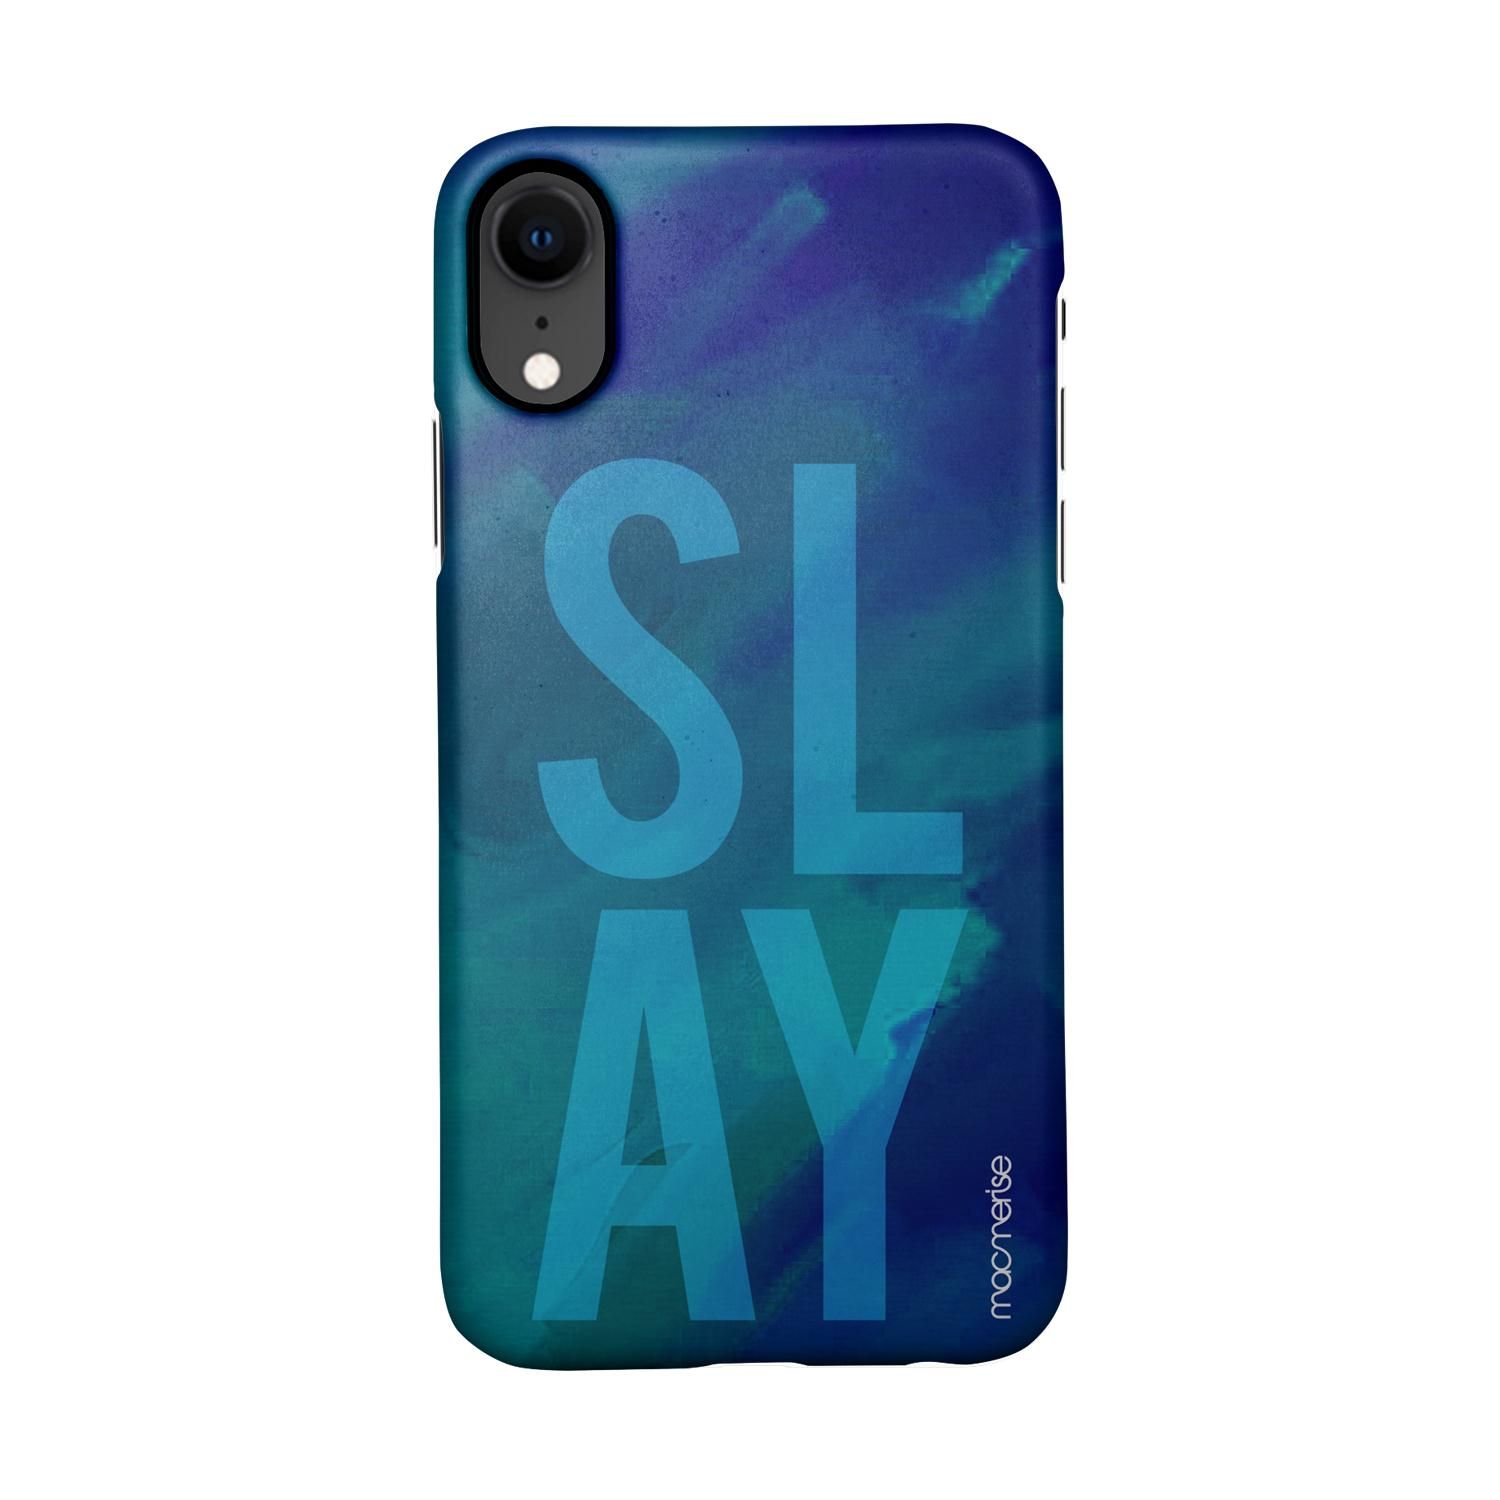 Buy Slay Blue - Sleek Phone Case for iPhone XR Online